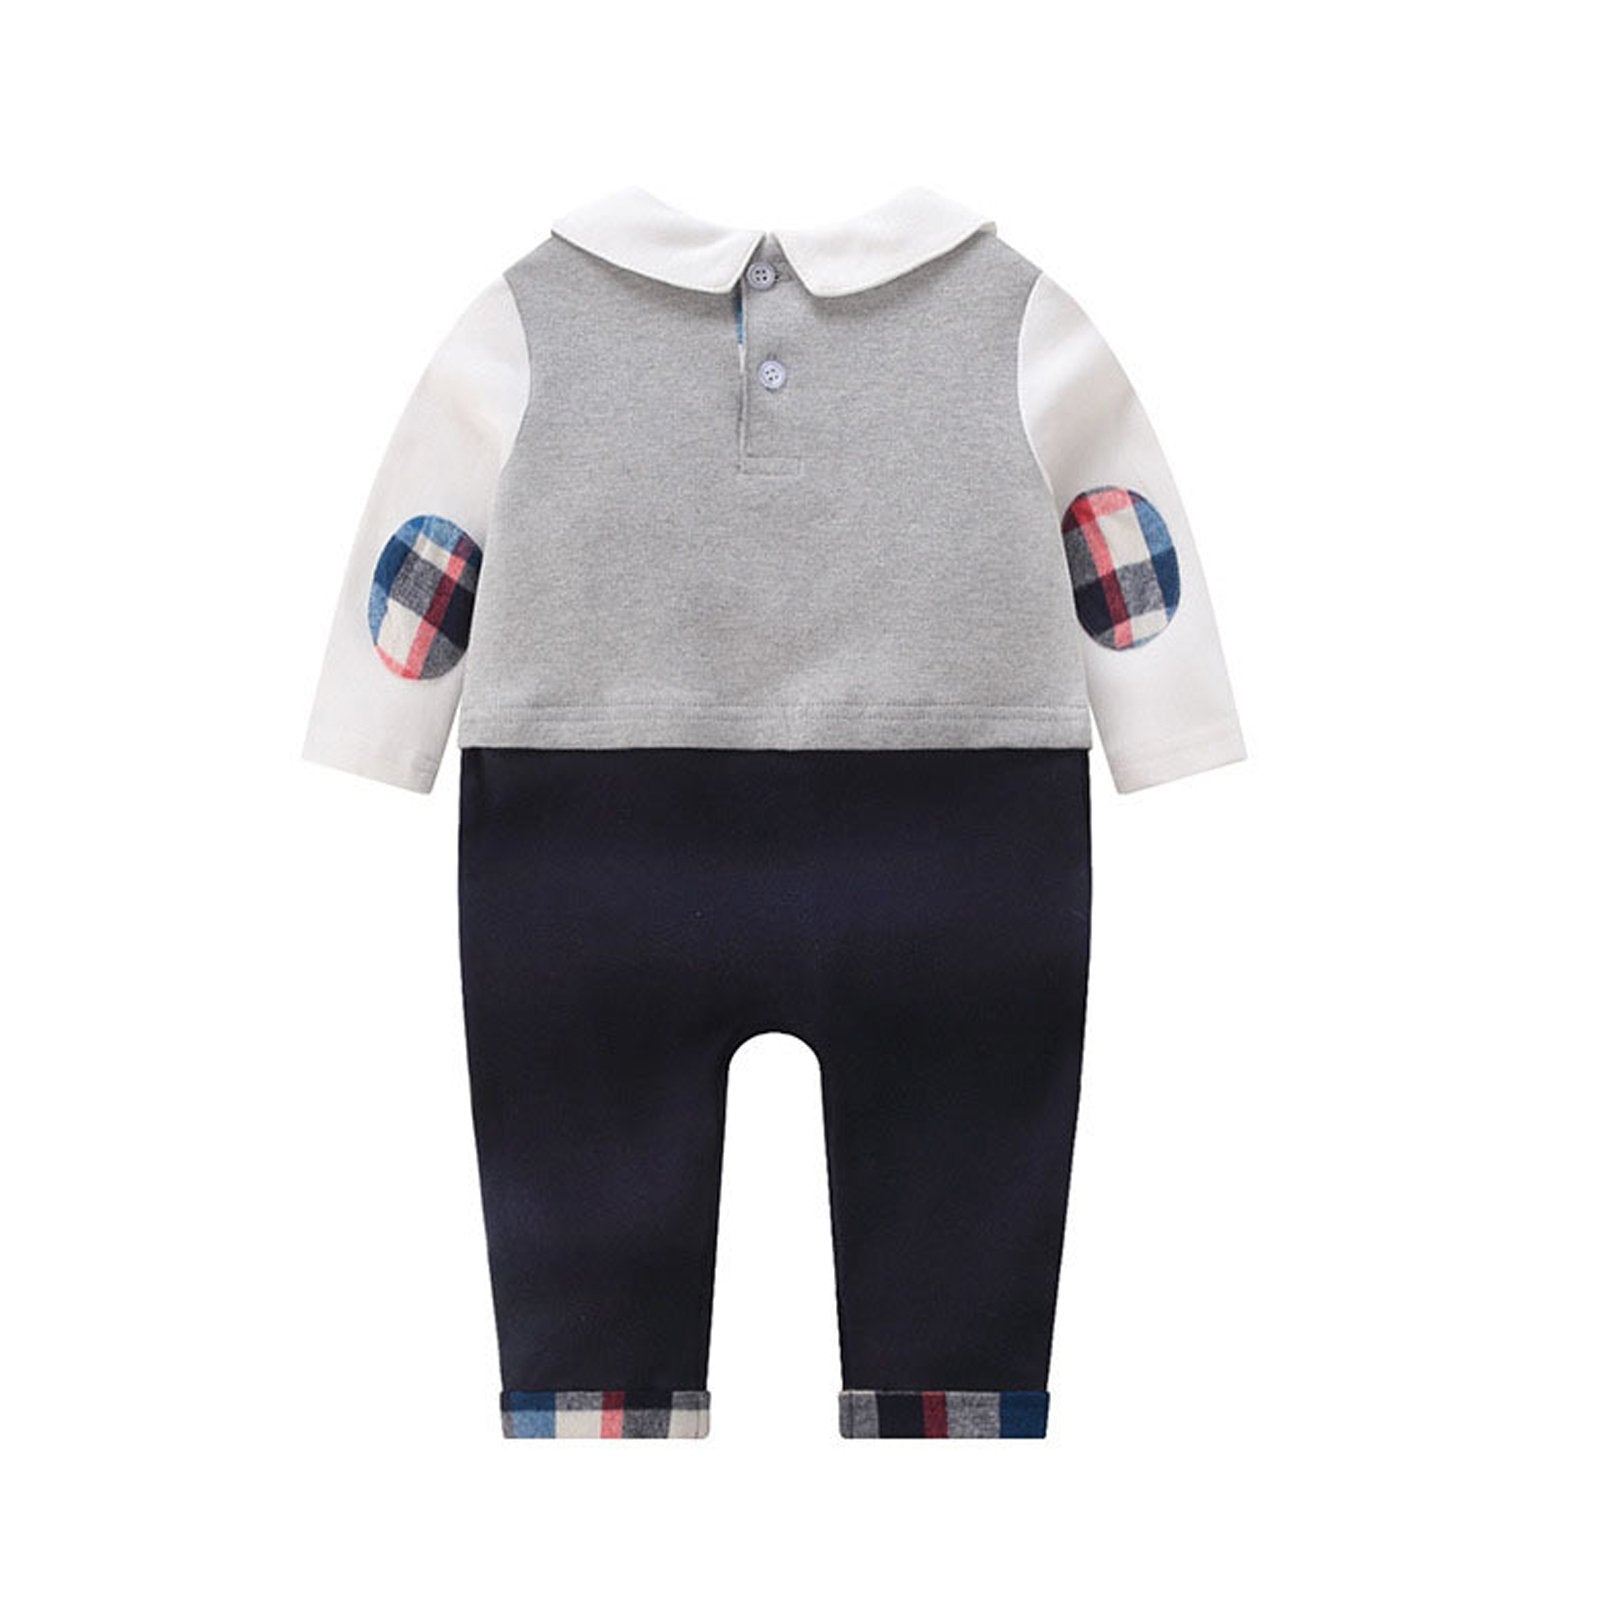 Newborn Infant Unisex Romper Baby Boys Girls Button Solid Bodysuit One Piece Jumpsuit